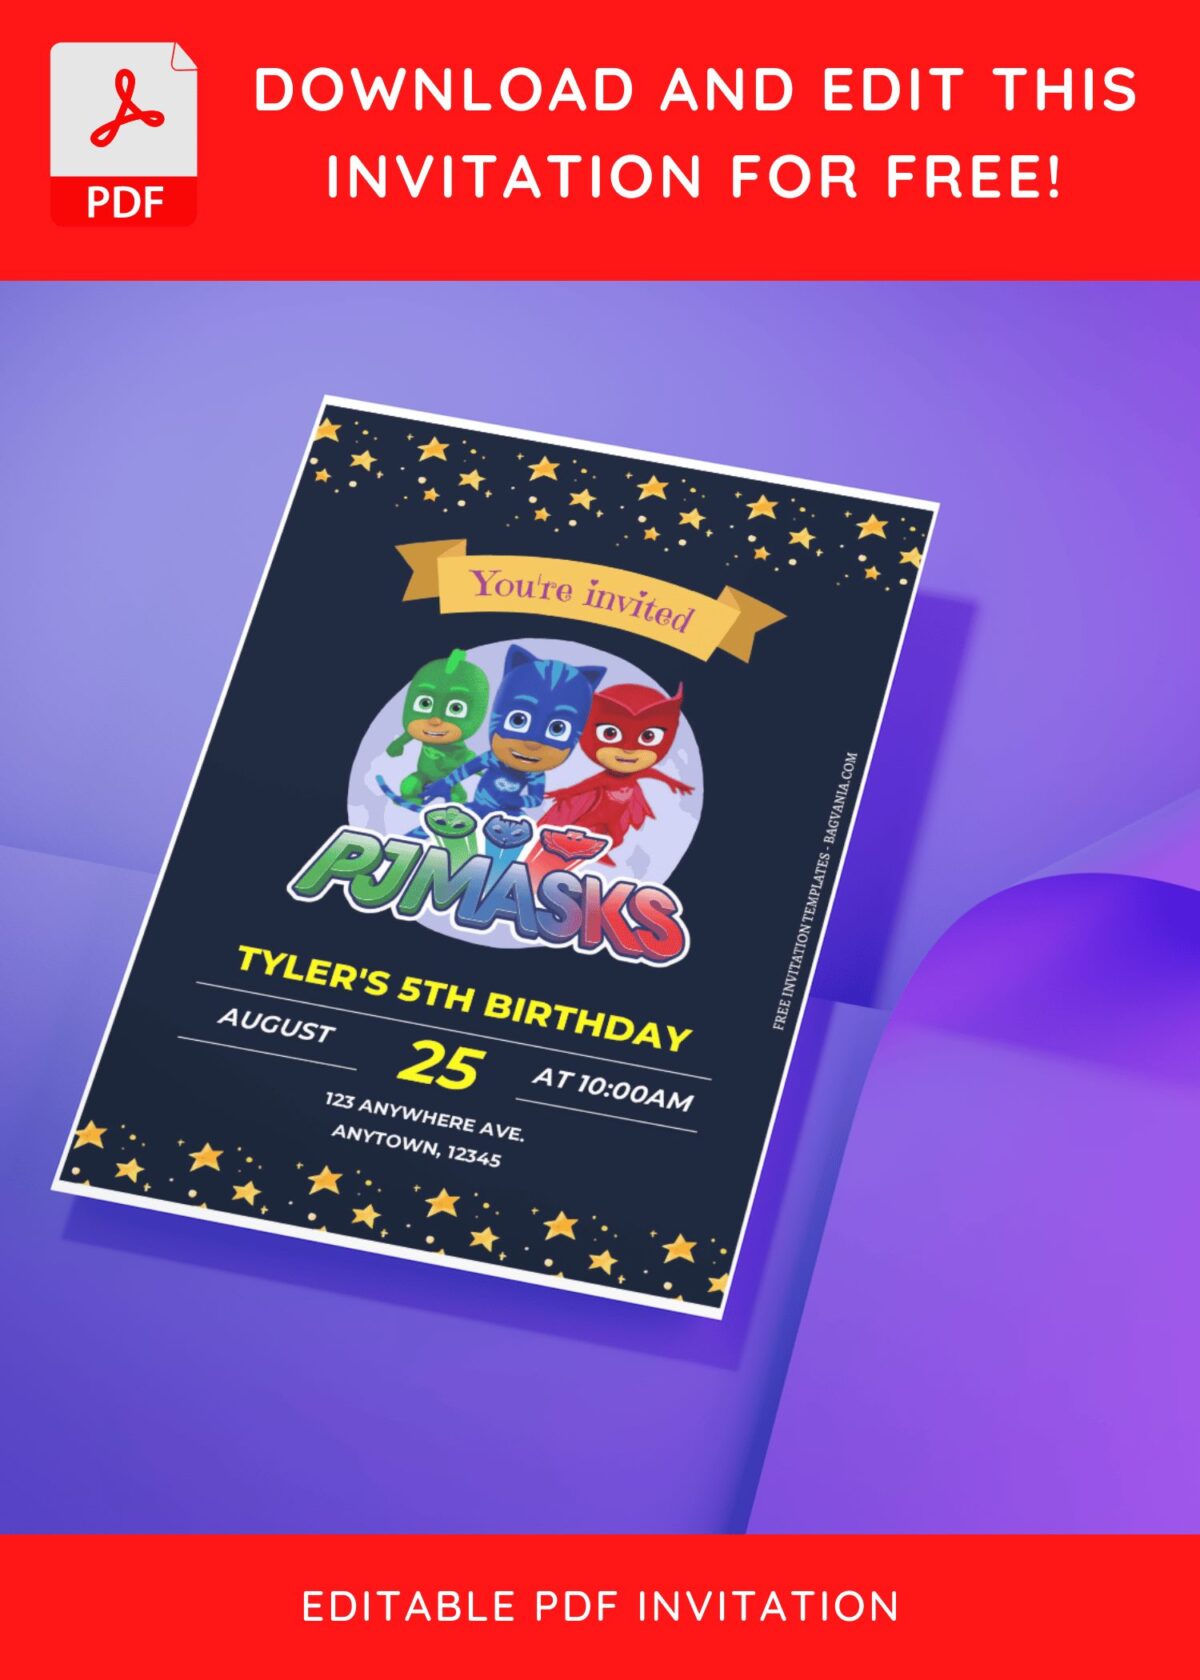 (Free Editable PDF) Lovely PJ Masks Birthday Invitation Templates I